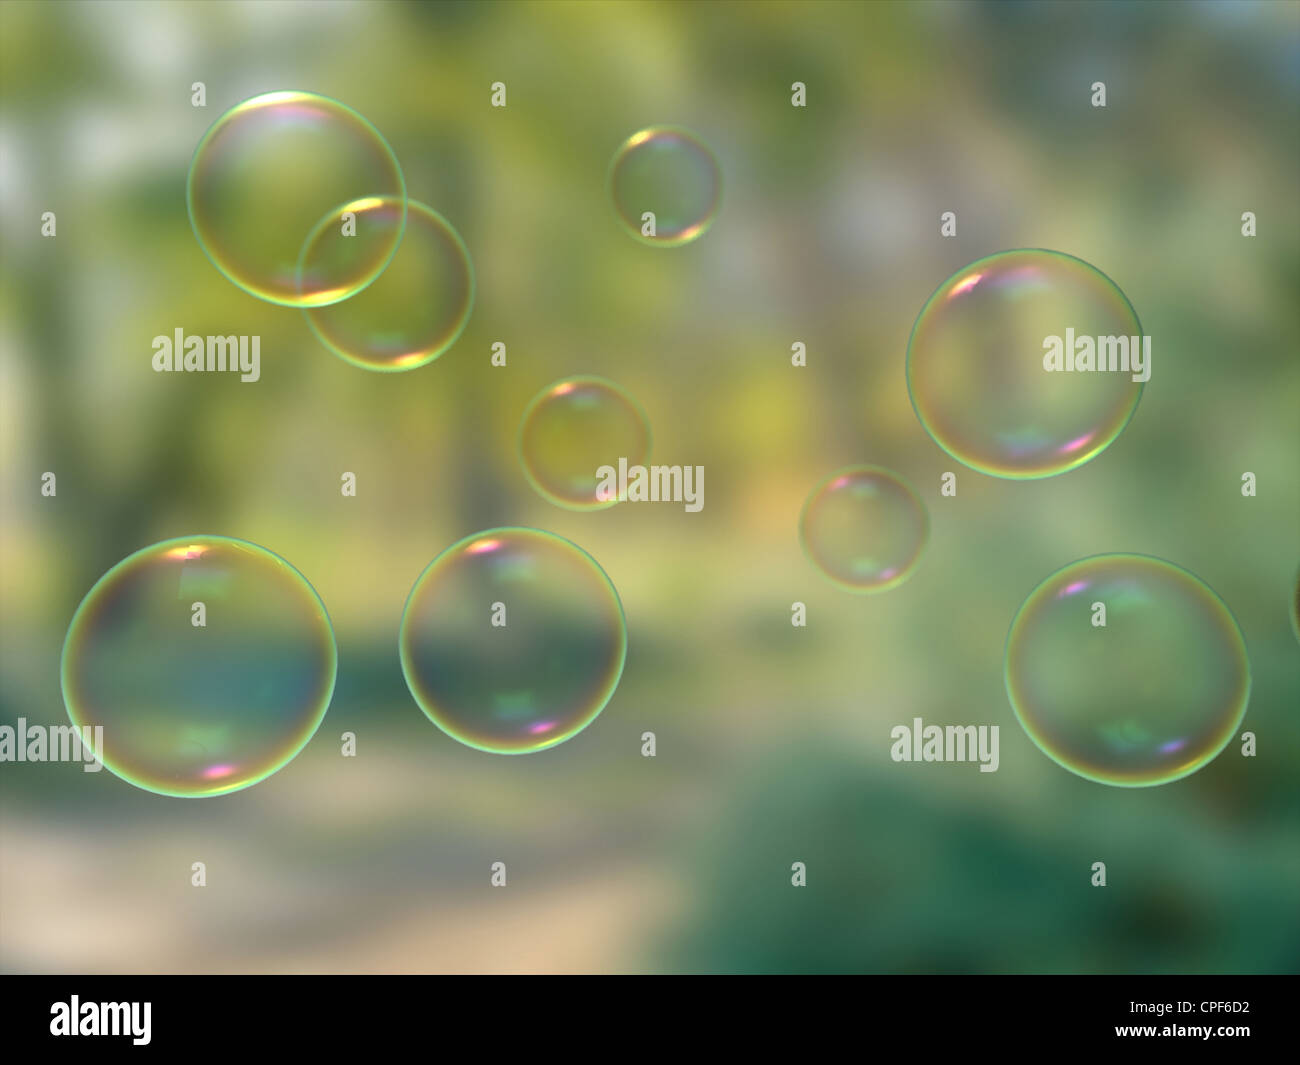 Soap bubbles on blur background wallpaper Stock Photo